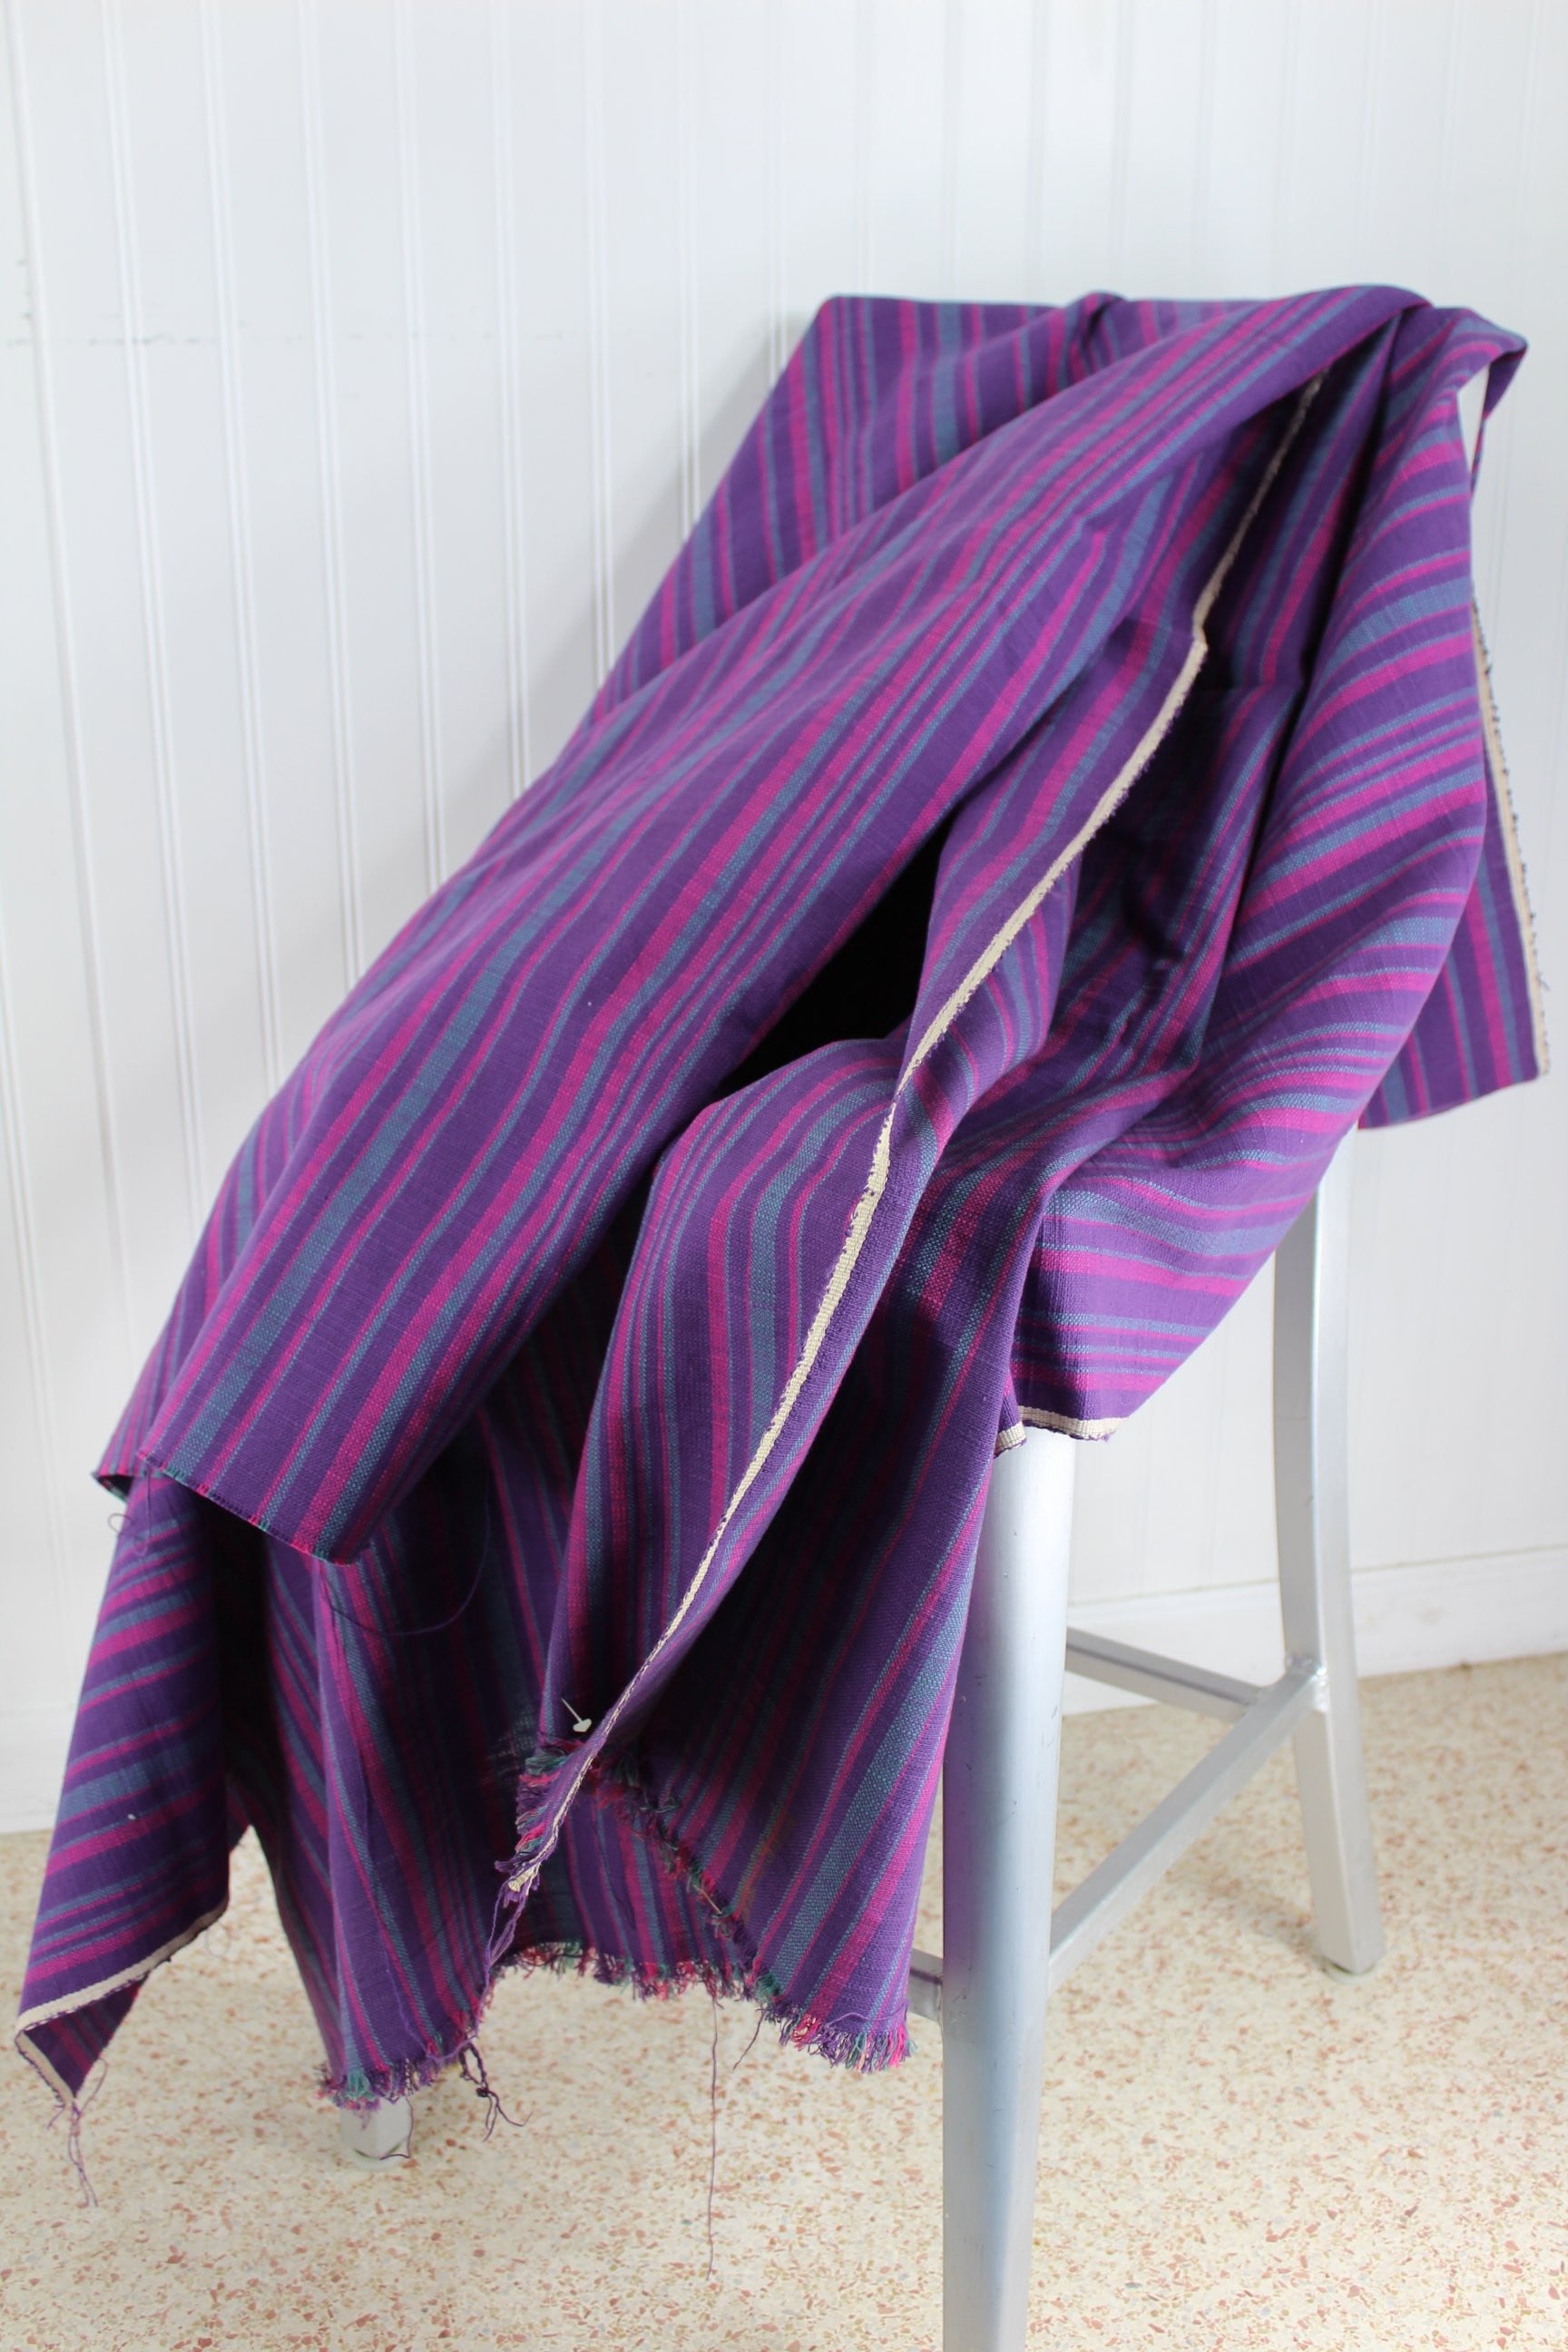 Heavy Fabric Stripe Purple Magenta Blue 3 Yards X 48" DIY Decor Crafts upholstery